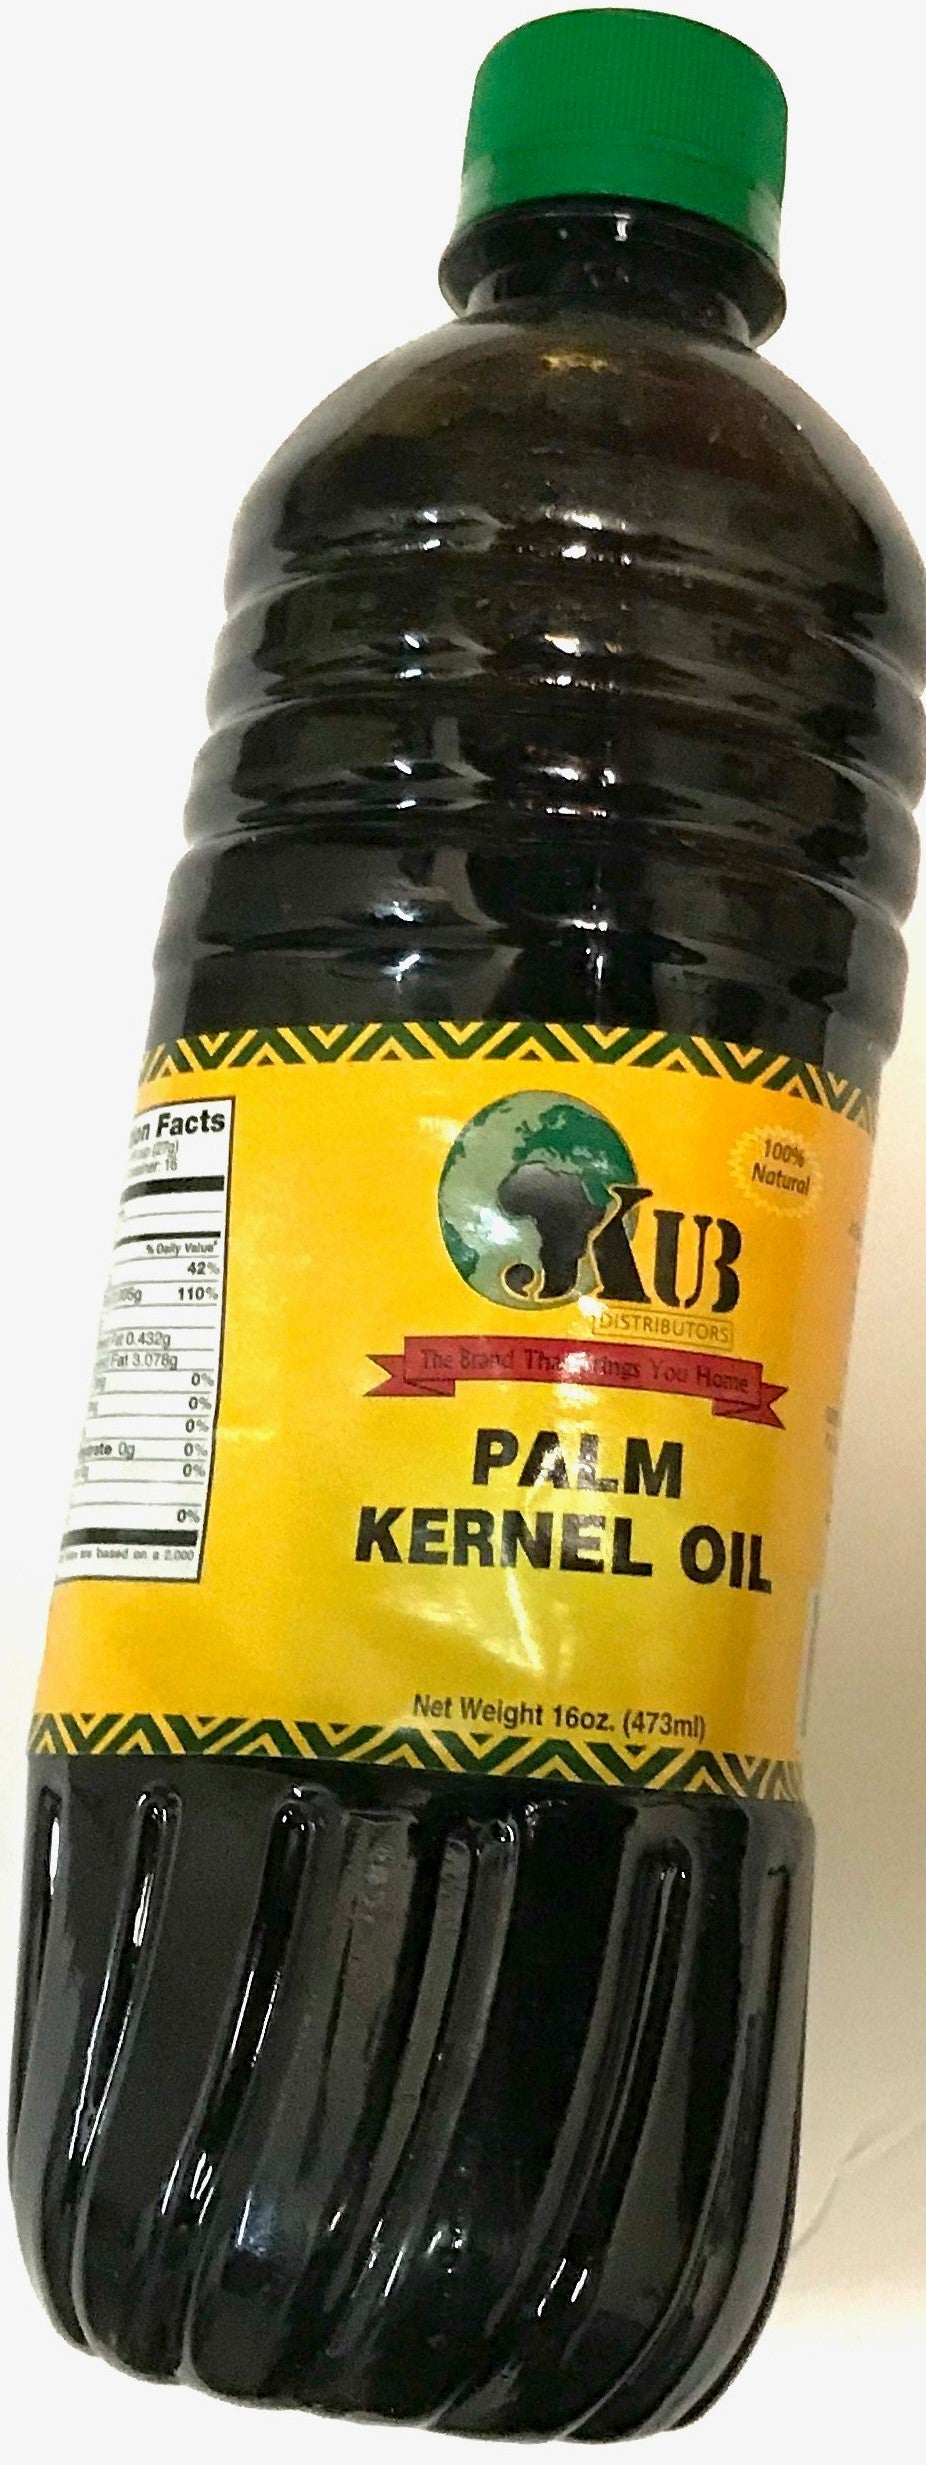 African Palm Kernel Oil, 16oz